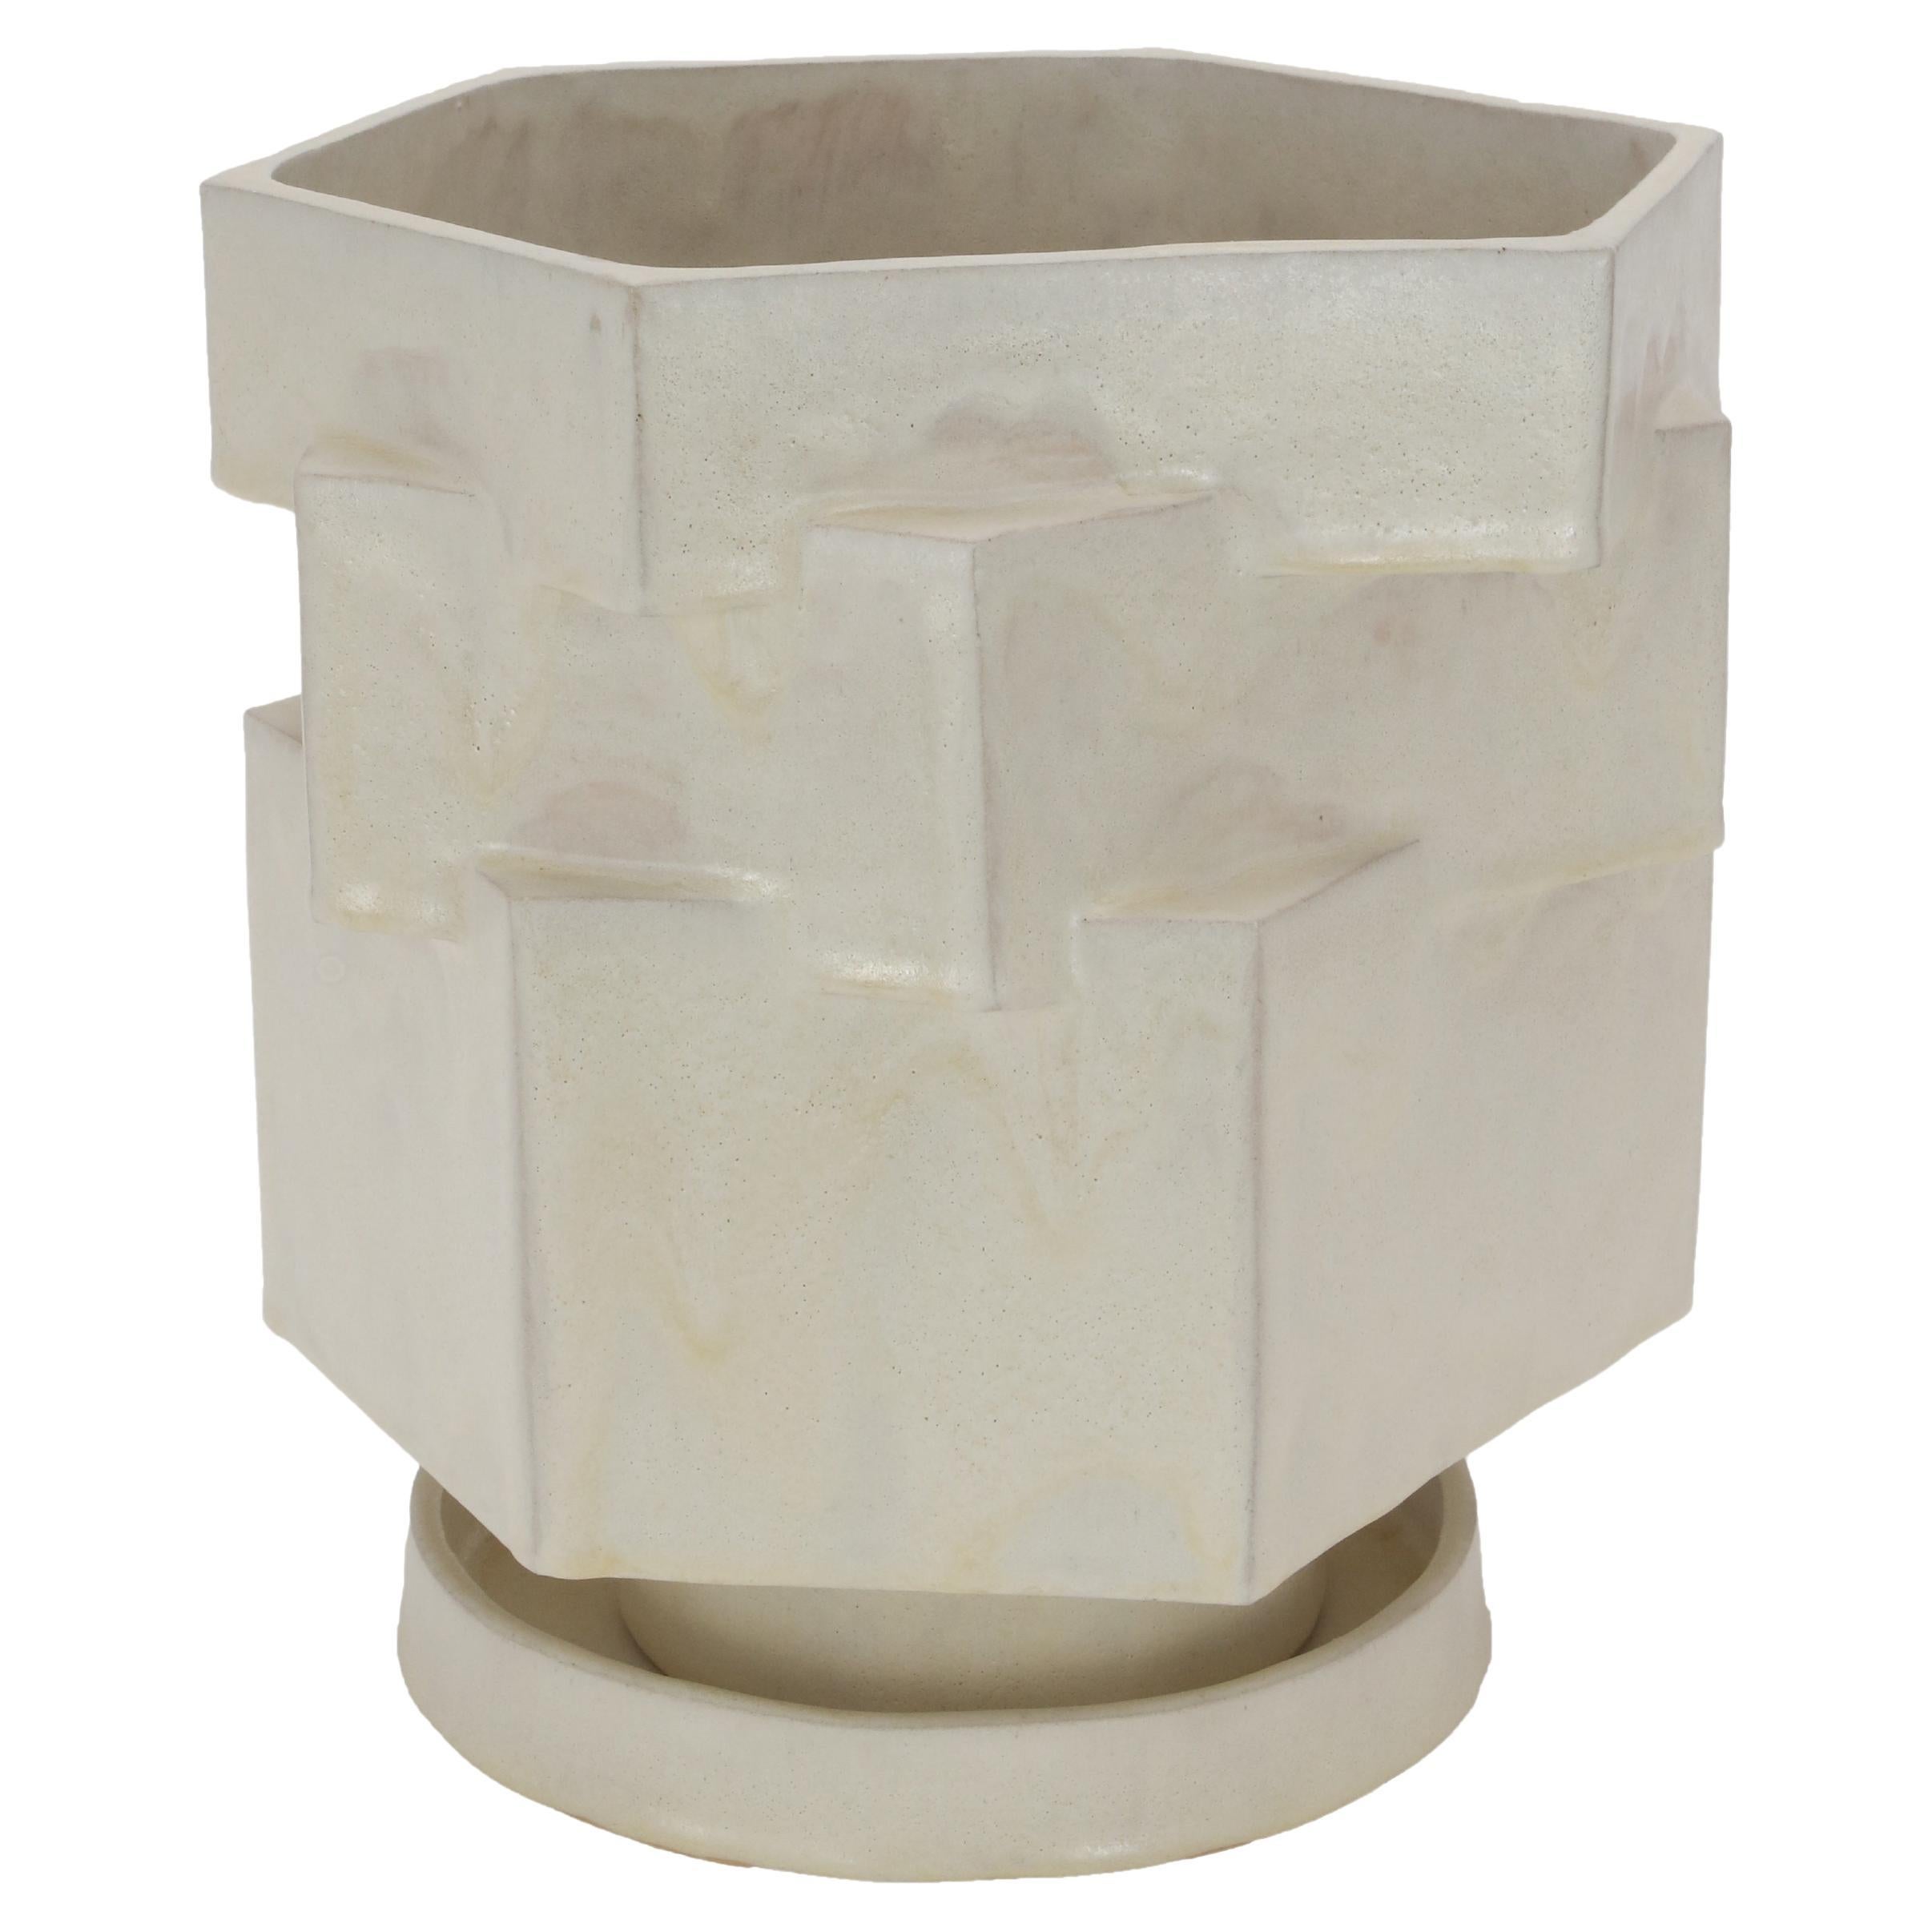 Ceramic Hex Planter in Cream by Bzippy For Sale